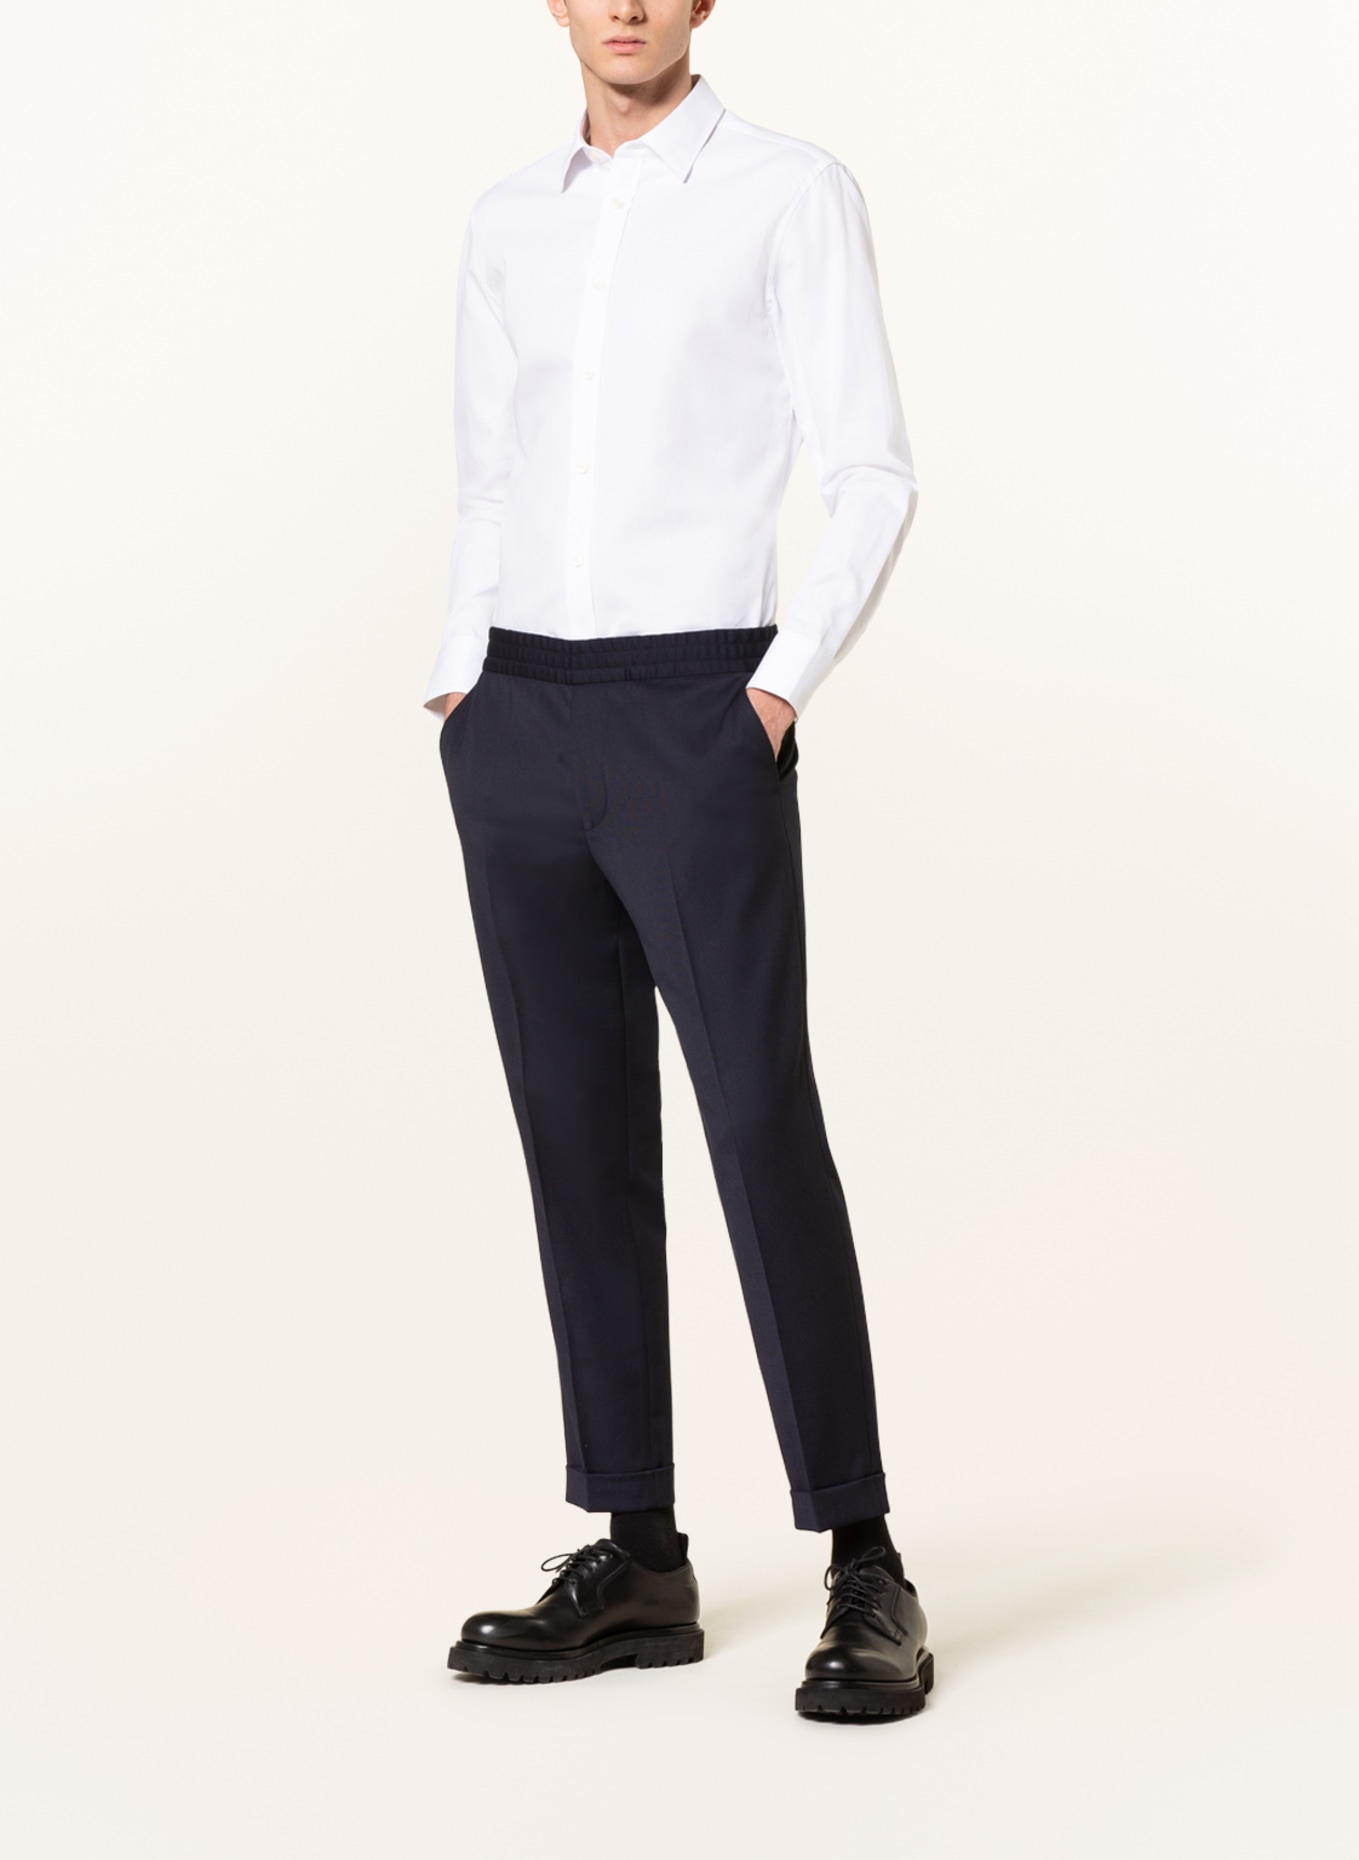 TIGER OF SWEDEN Hemd ADLEY Slim Fit, Farbe: WEISS (Bild 2)